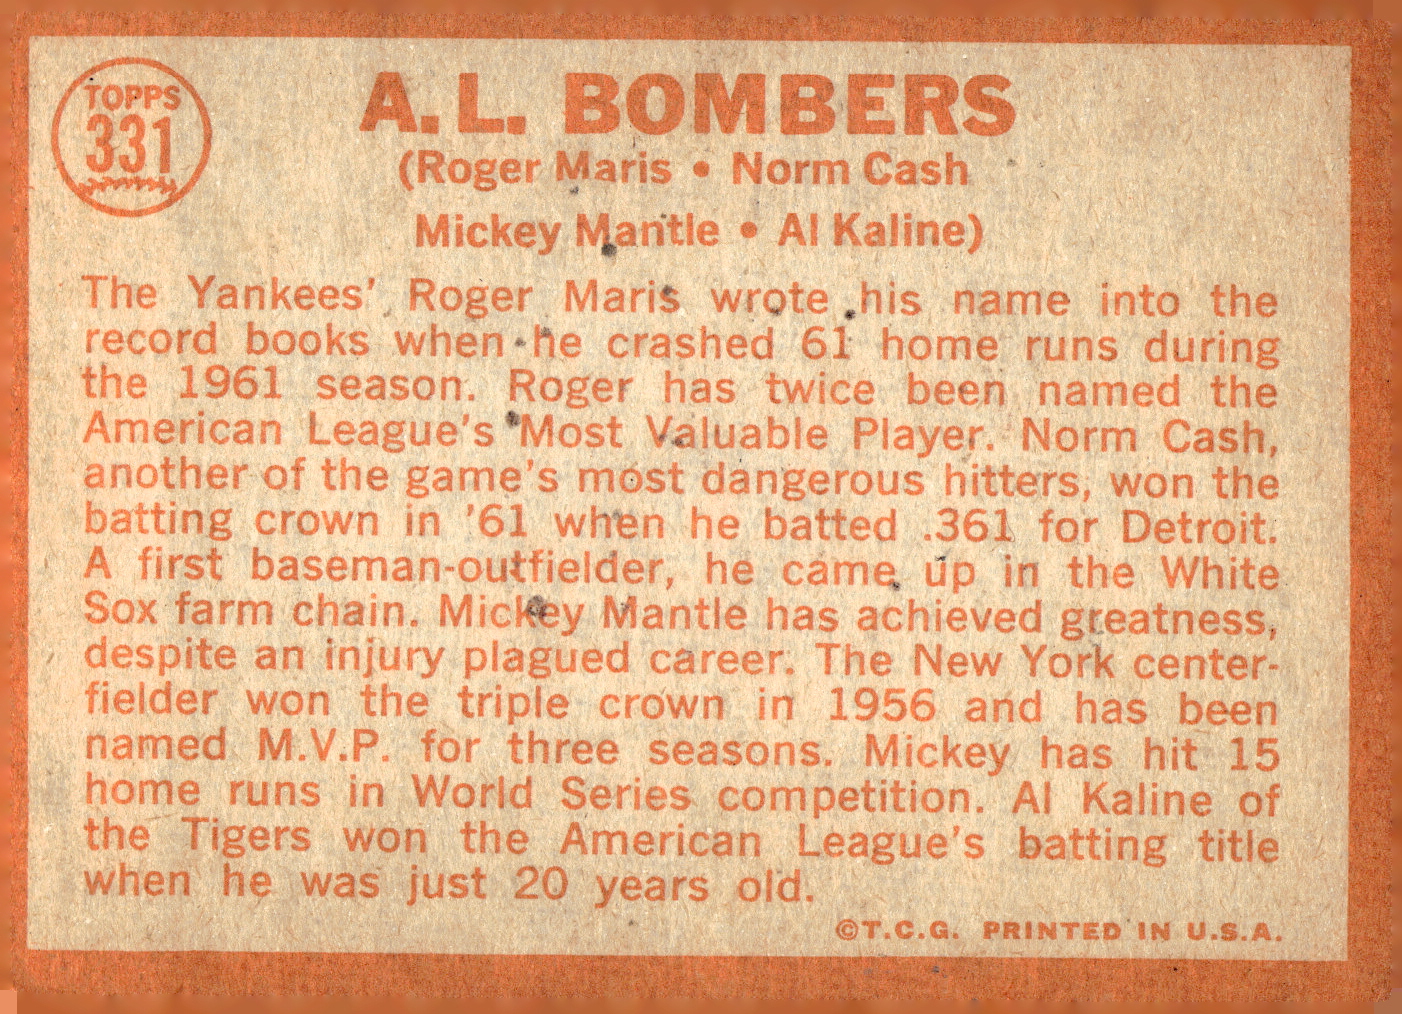 1964 Topps #331 AL Bombers/Roger Maris/Norm Cash/Mickey Mantle/Al Kaline back image